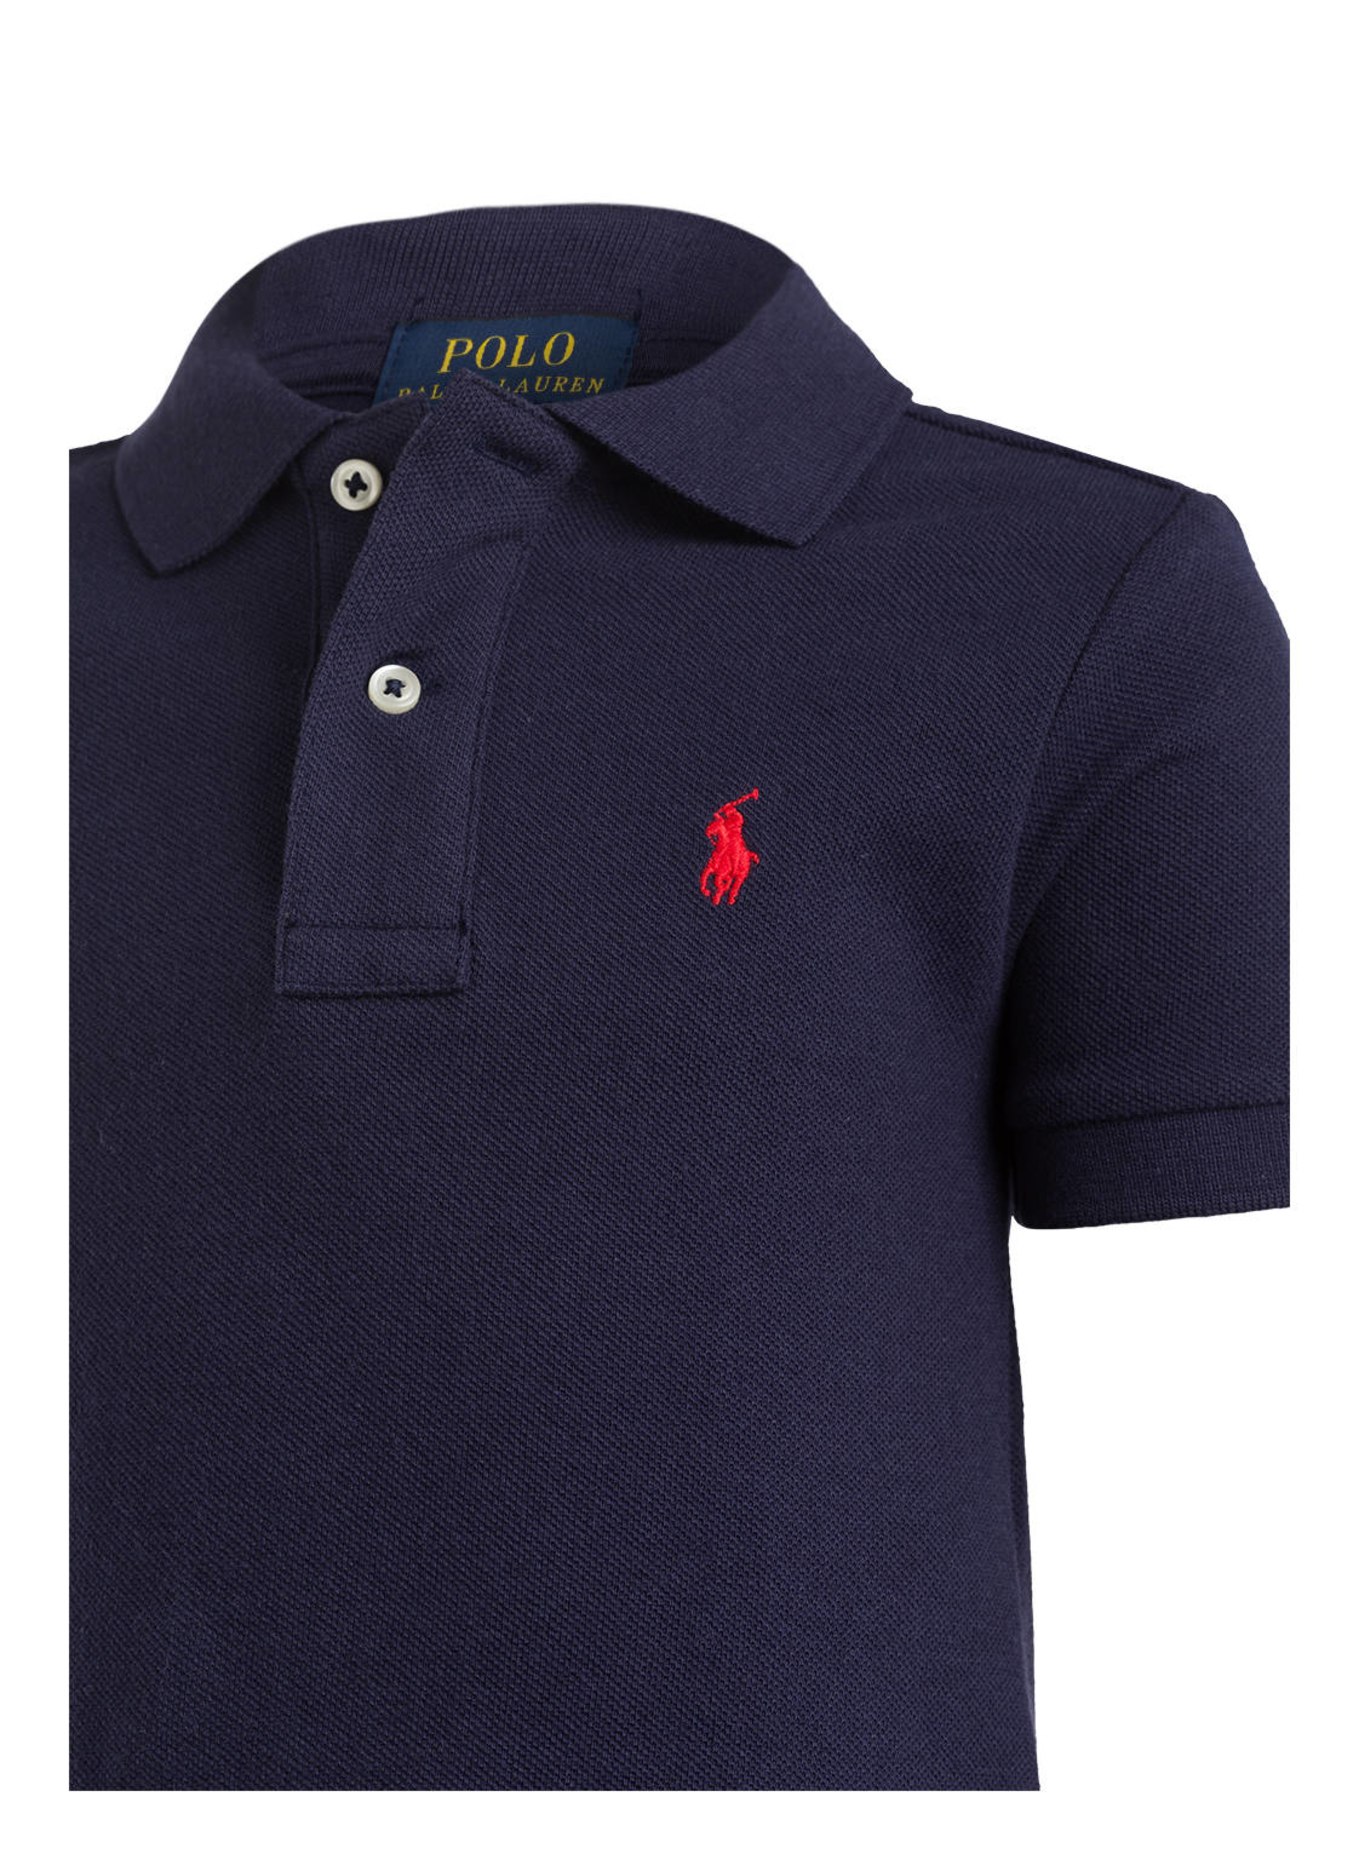 POLO RALPH LAUREN Piqué-Poloshirt, Farbe: 005 french navy (Bild 3)